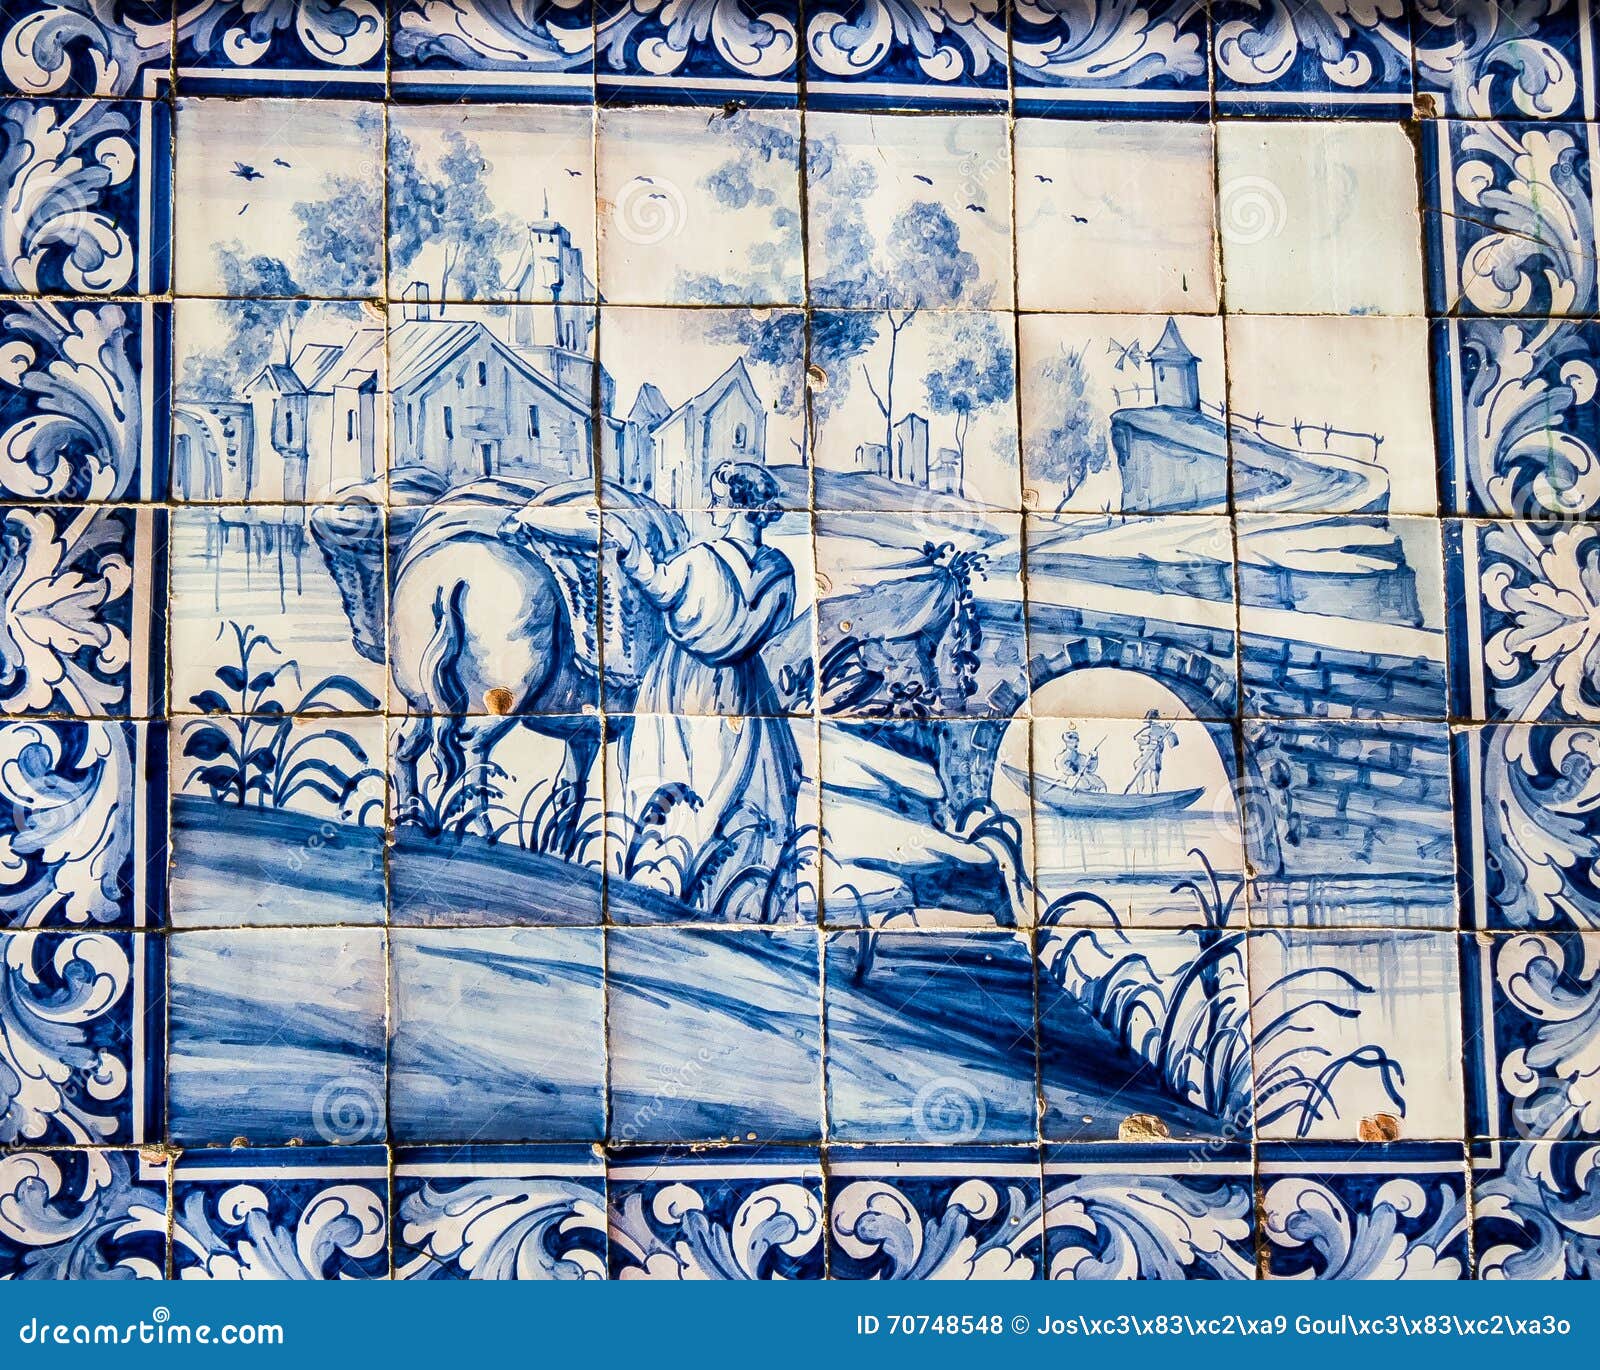 lisbon, portugal: tiles with bucolic scene in loios square, mouraria quarter